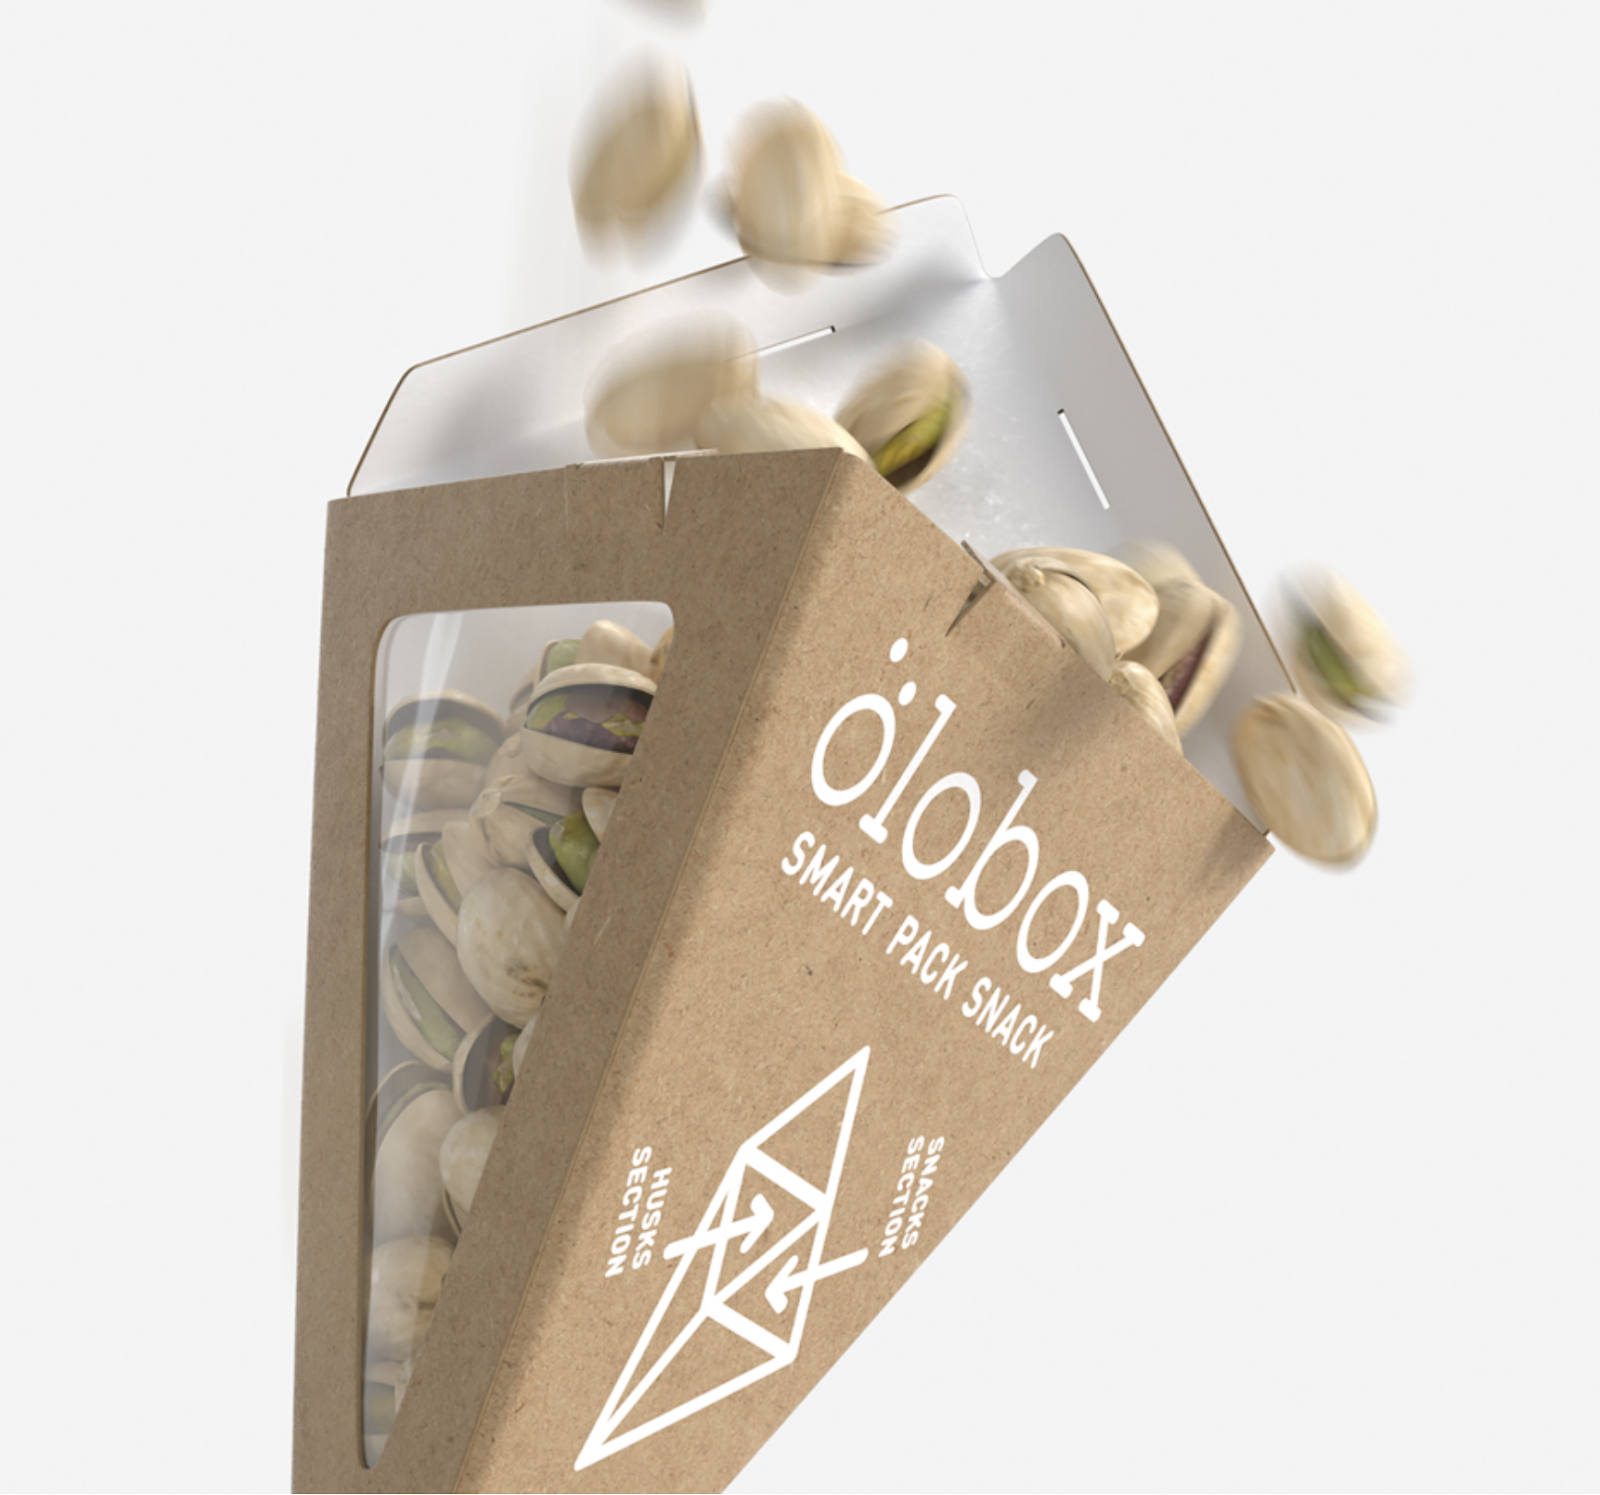 ÖLOBOX smart pack snack.